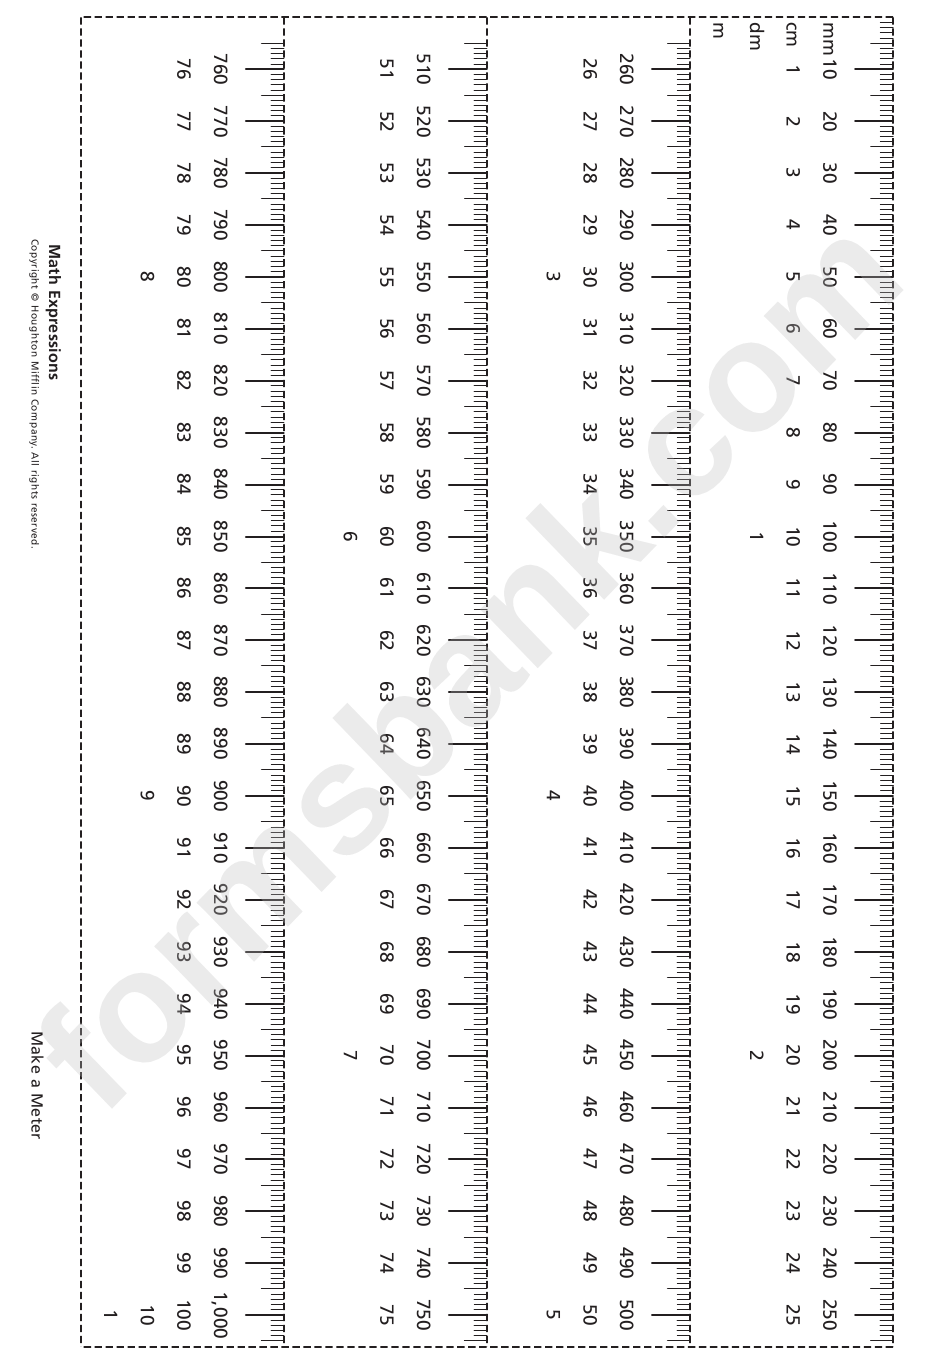 100 Cm Centimeter Ruler Template printable pdf download